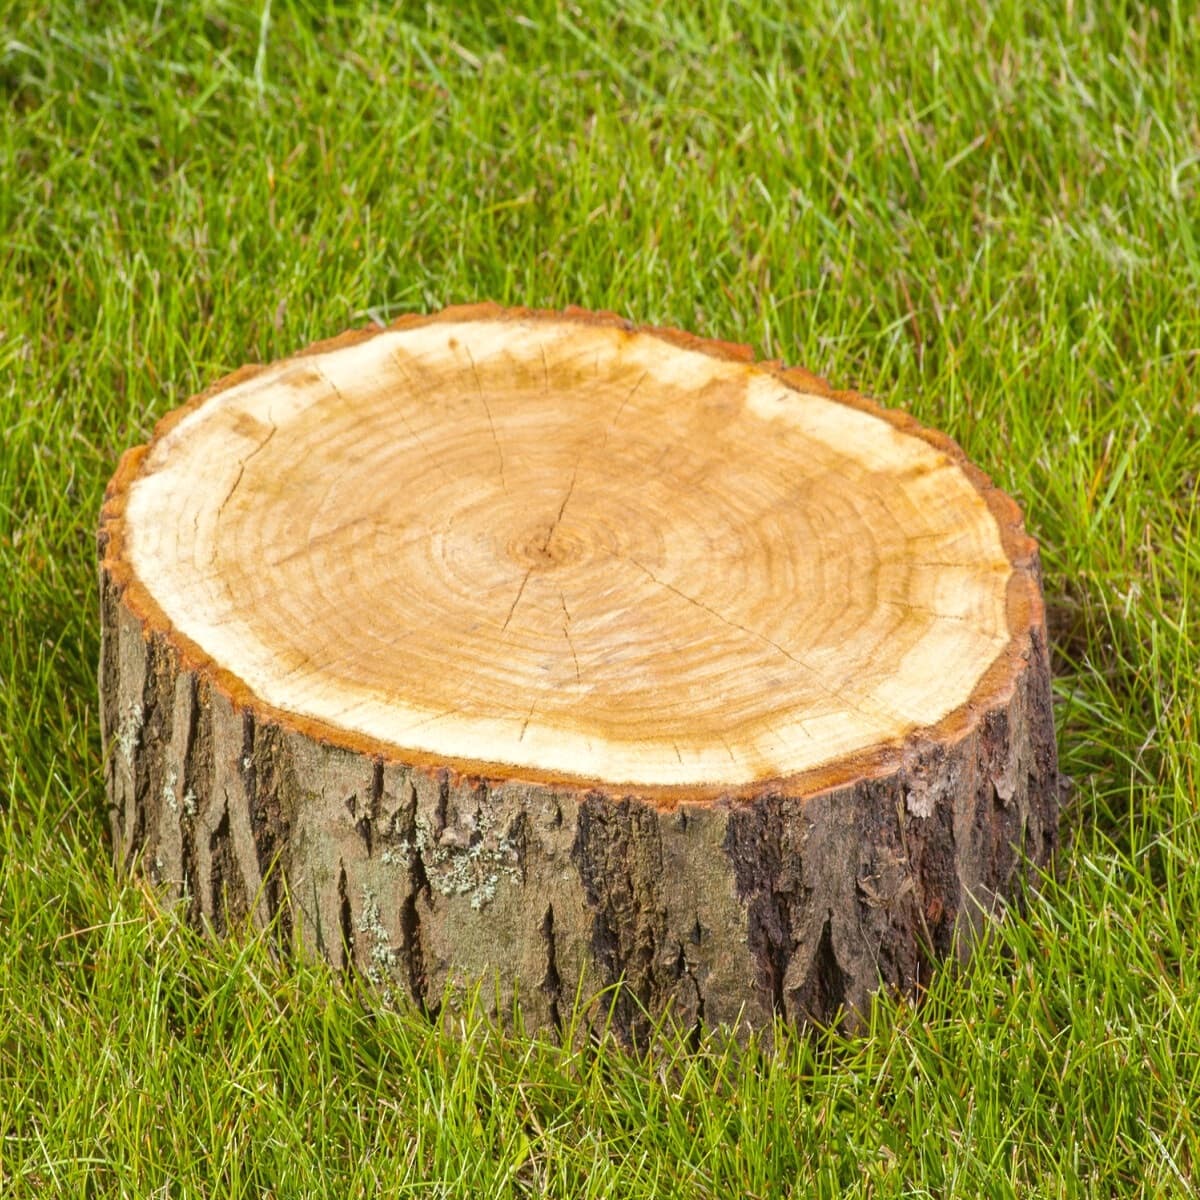 Preserved tree stump